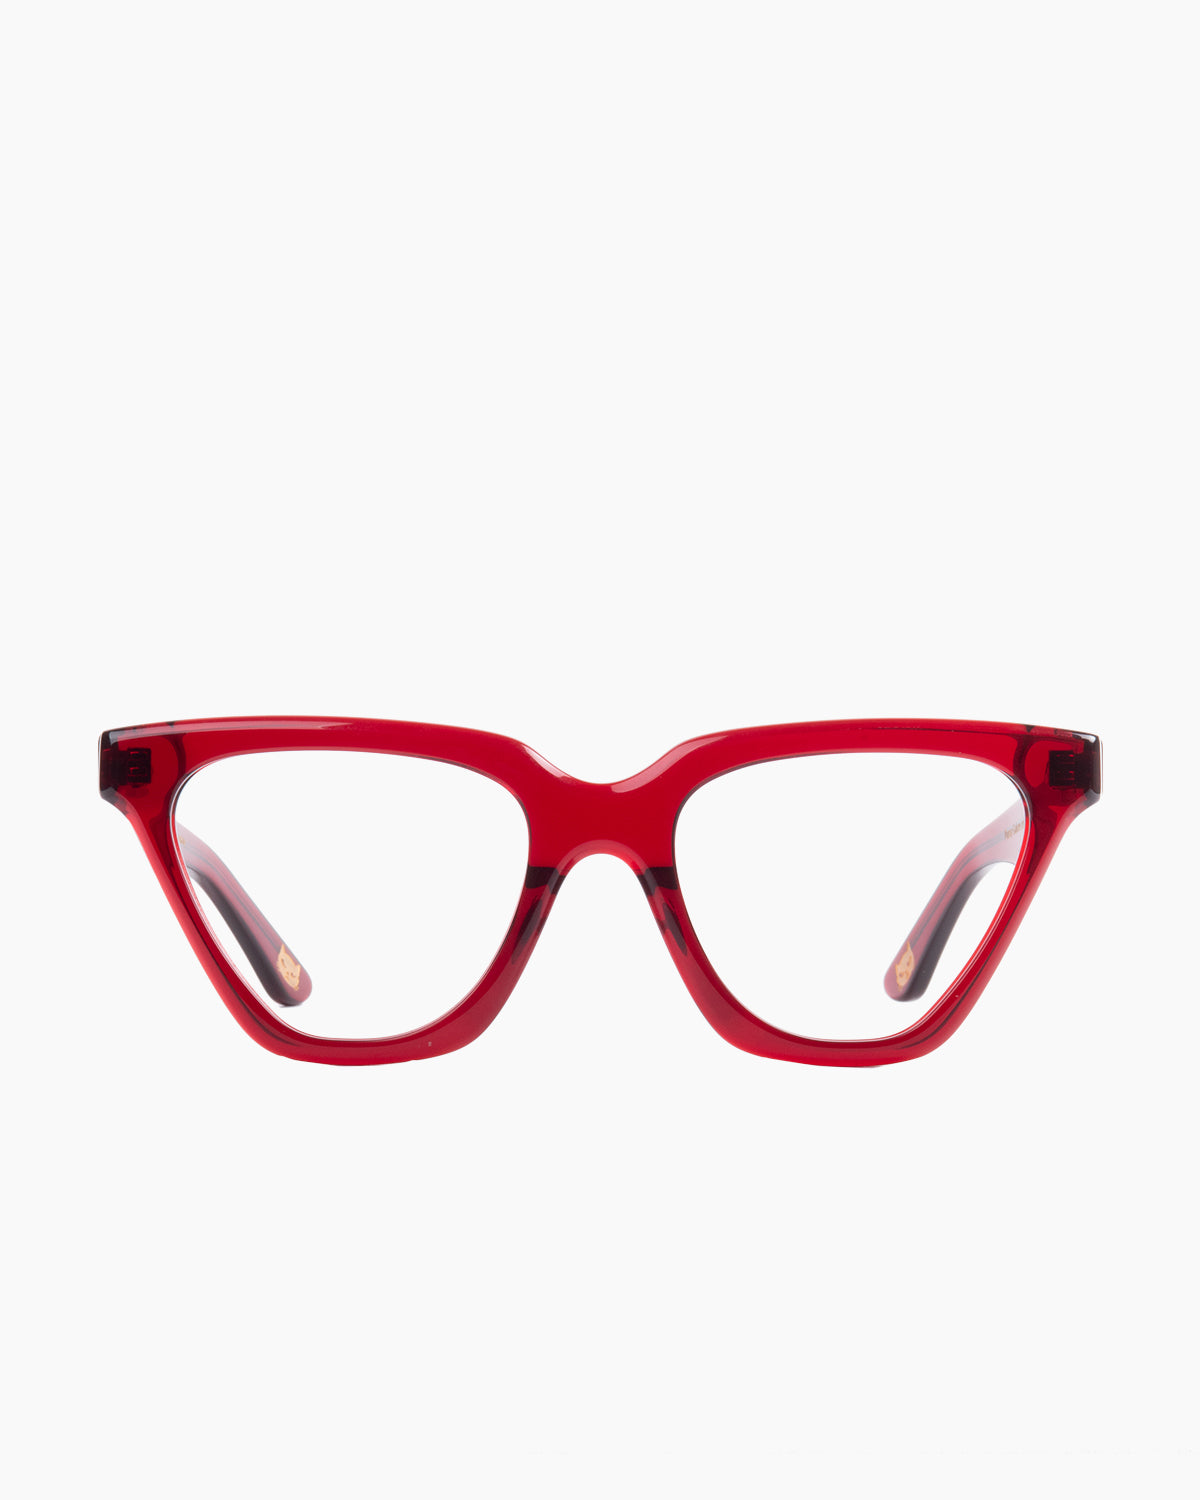 Spectacleeyeworks - Joelle - c730 | Bar à lunettes:  Marie-Sophie Dion